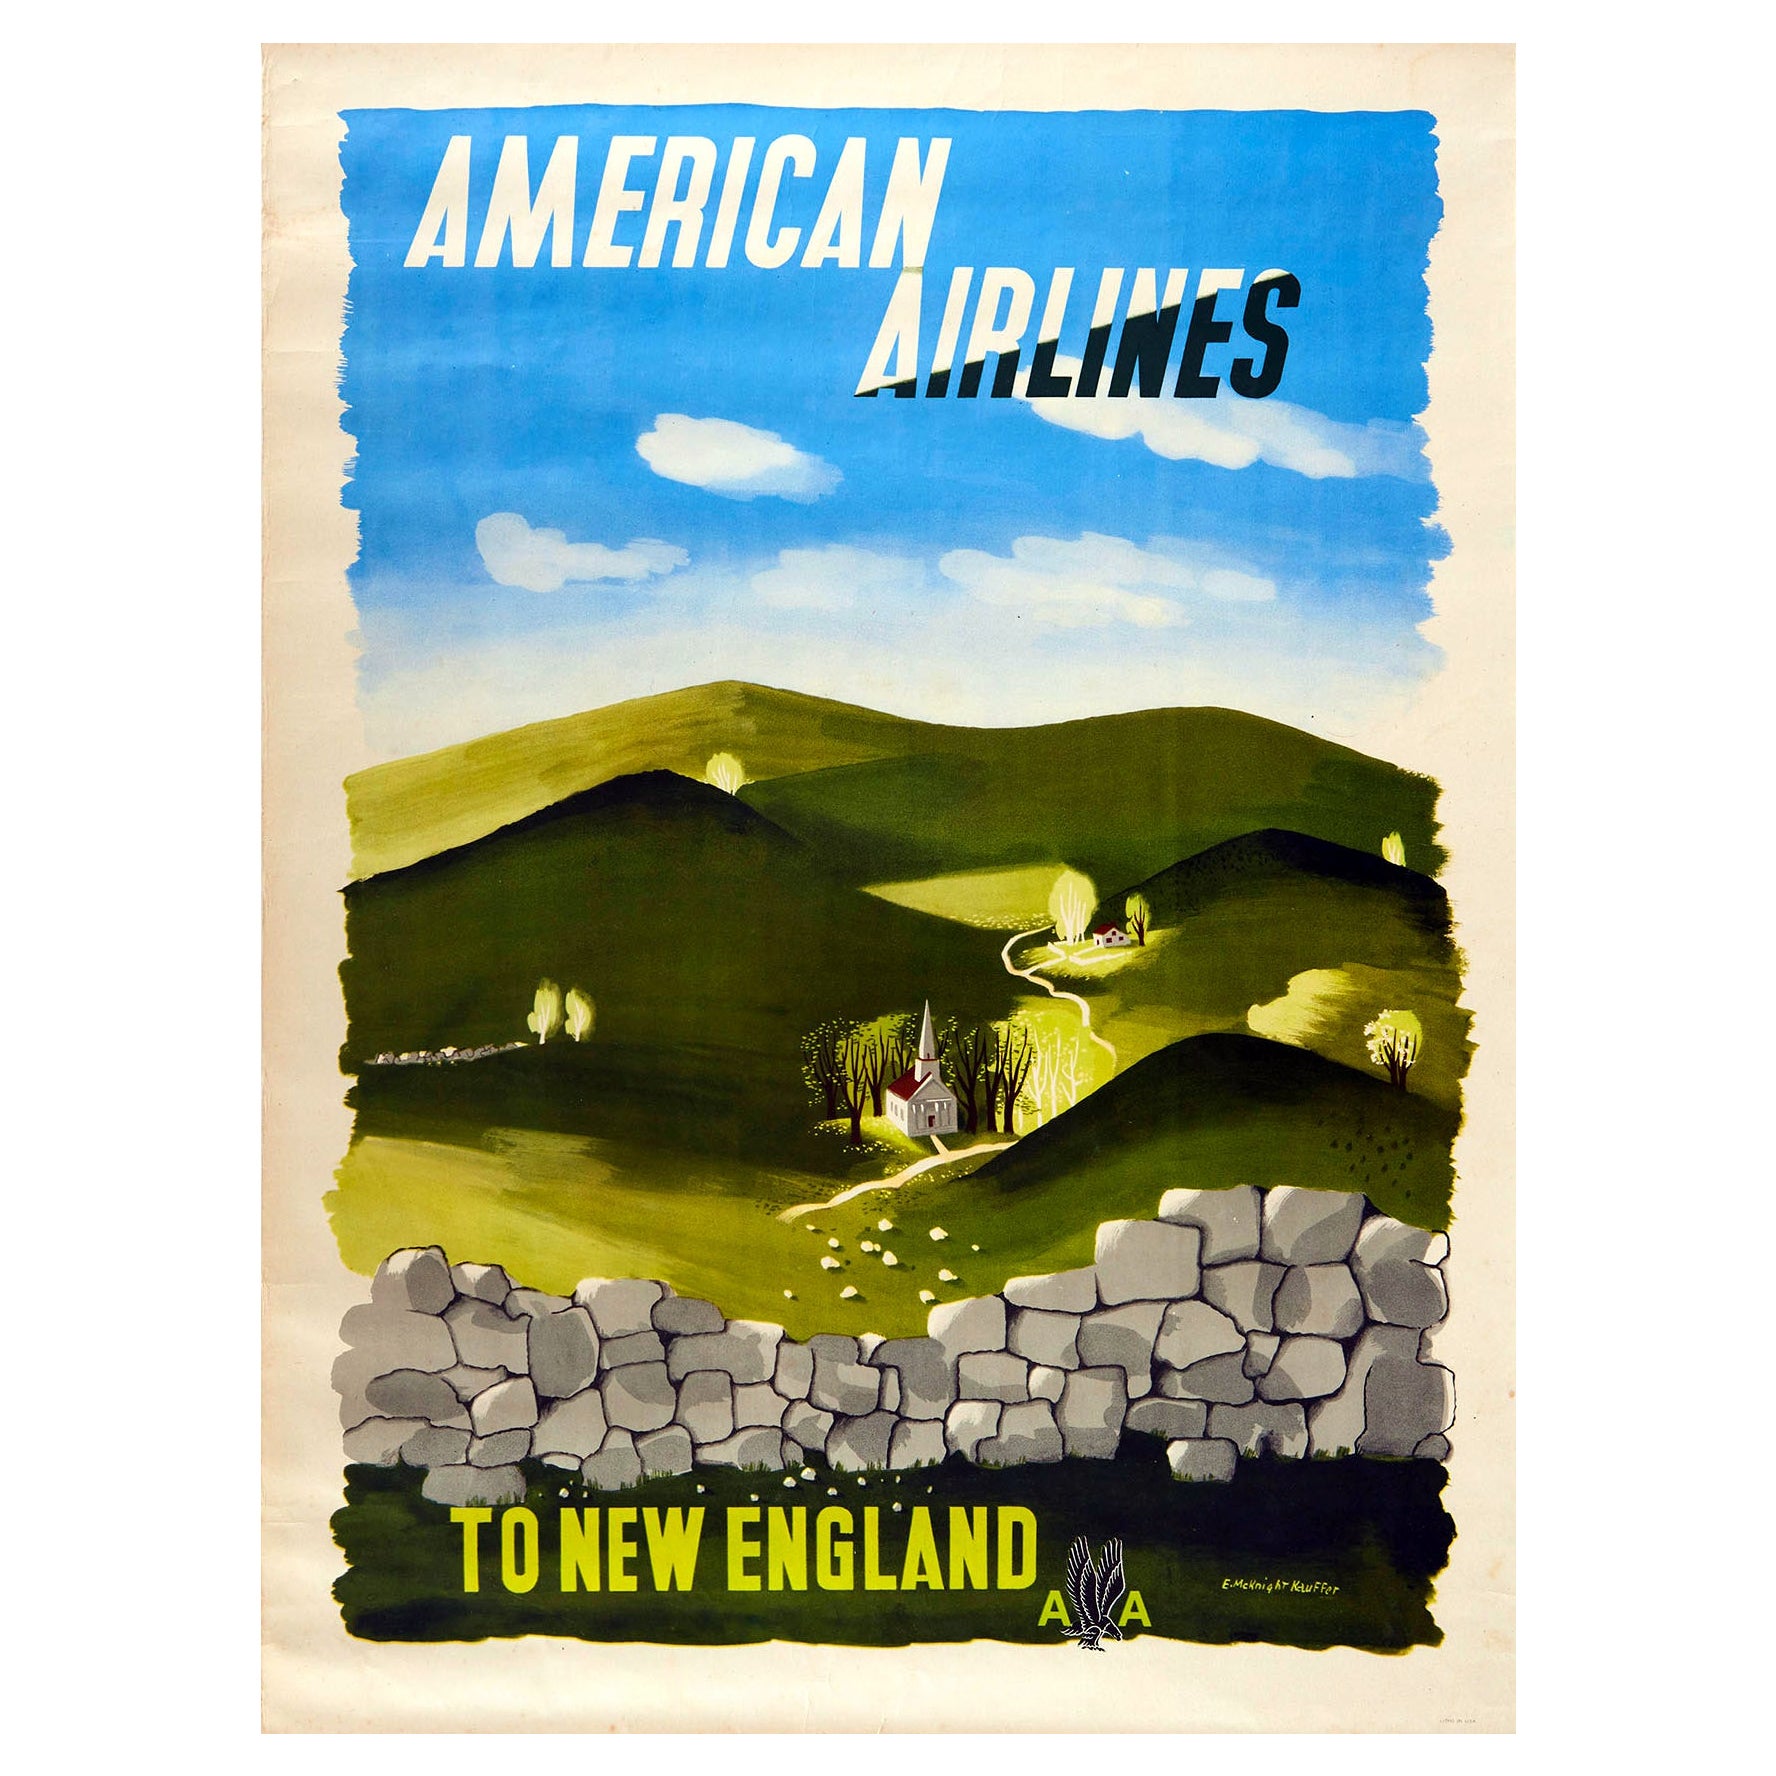 Original-Vintage-Reiseplakat American Airlines To New England, McKnight Kauffer